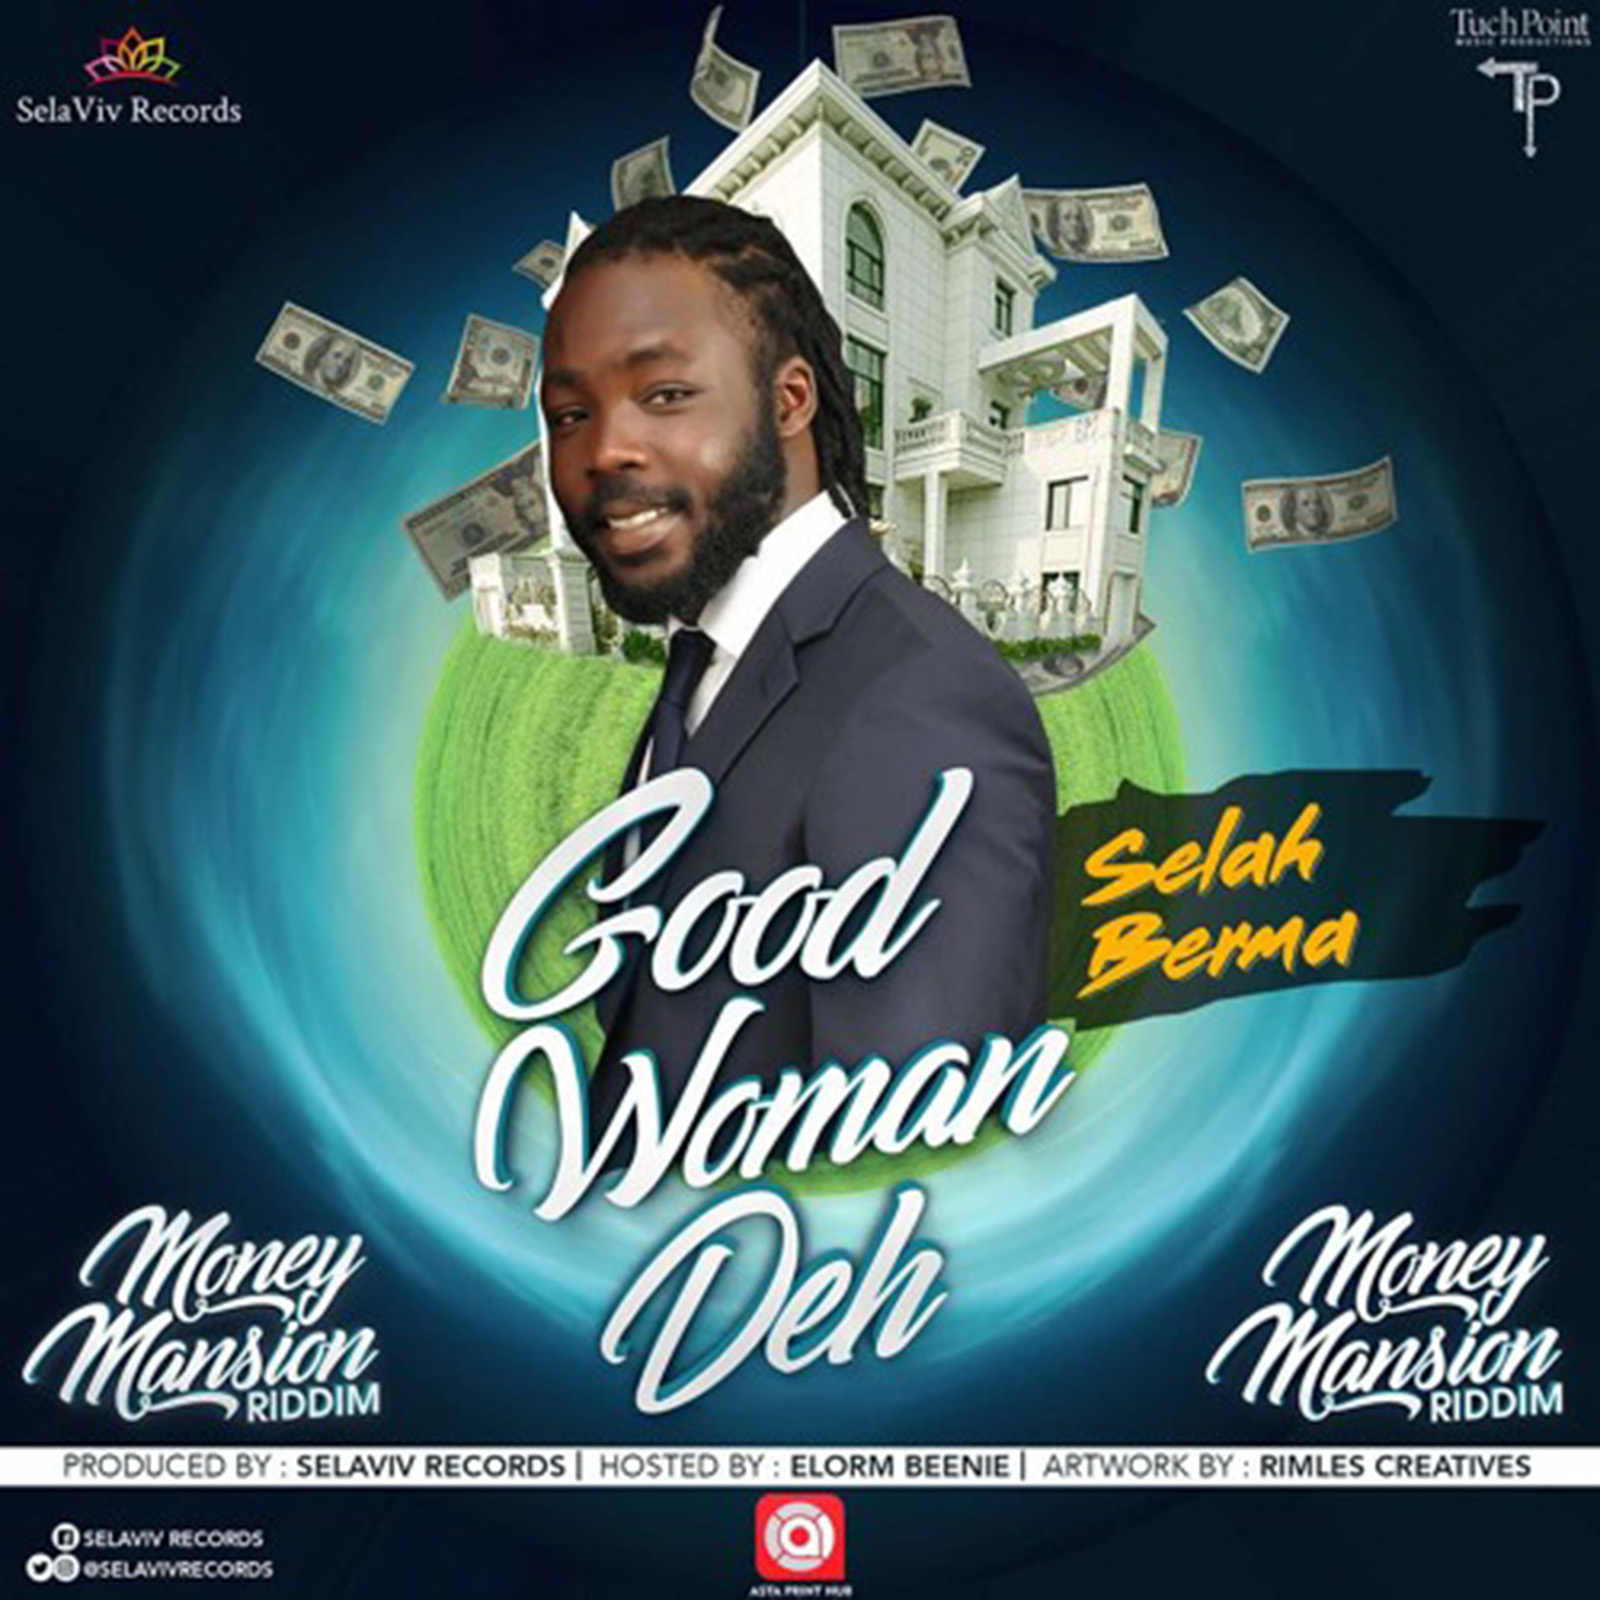 Good Woman Deh (Money Mansion Riddim) by Selah Berma